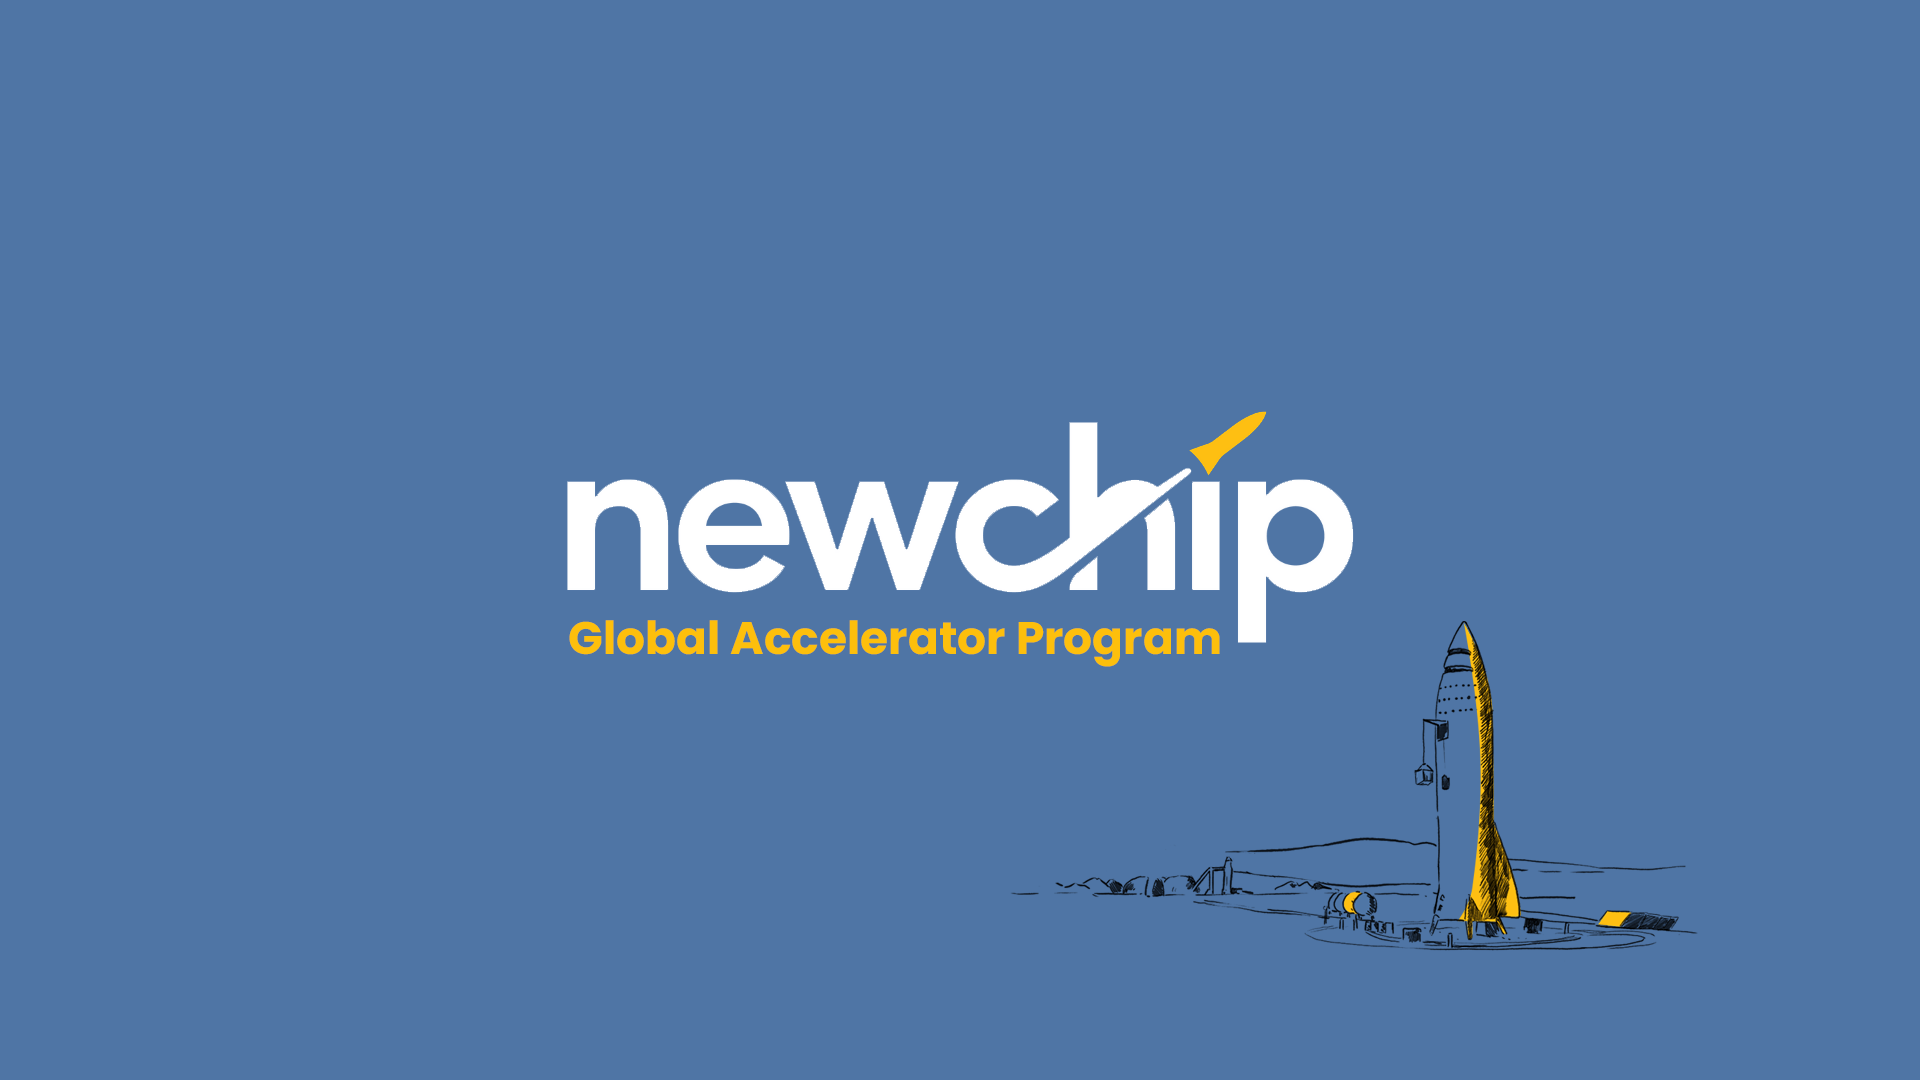 Tasker accepted into Newchip Accelerator Program for Startups